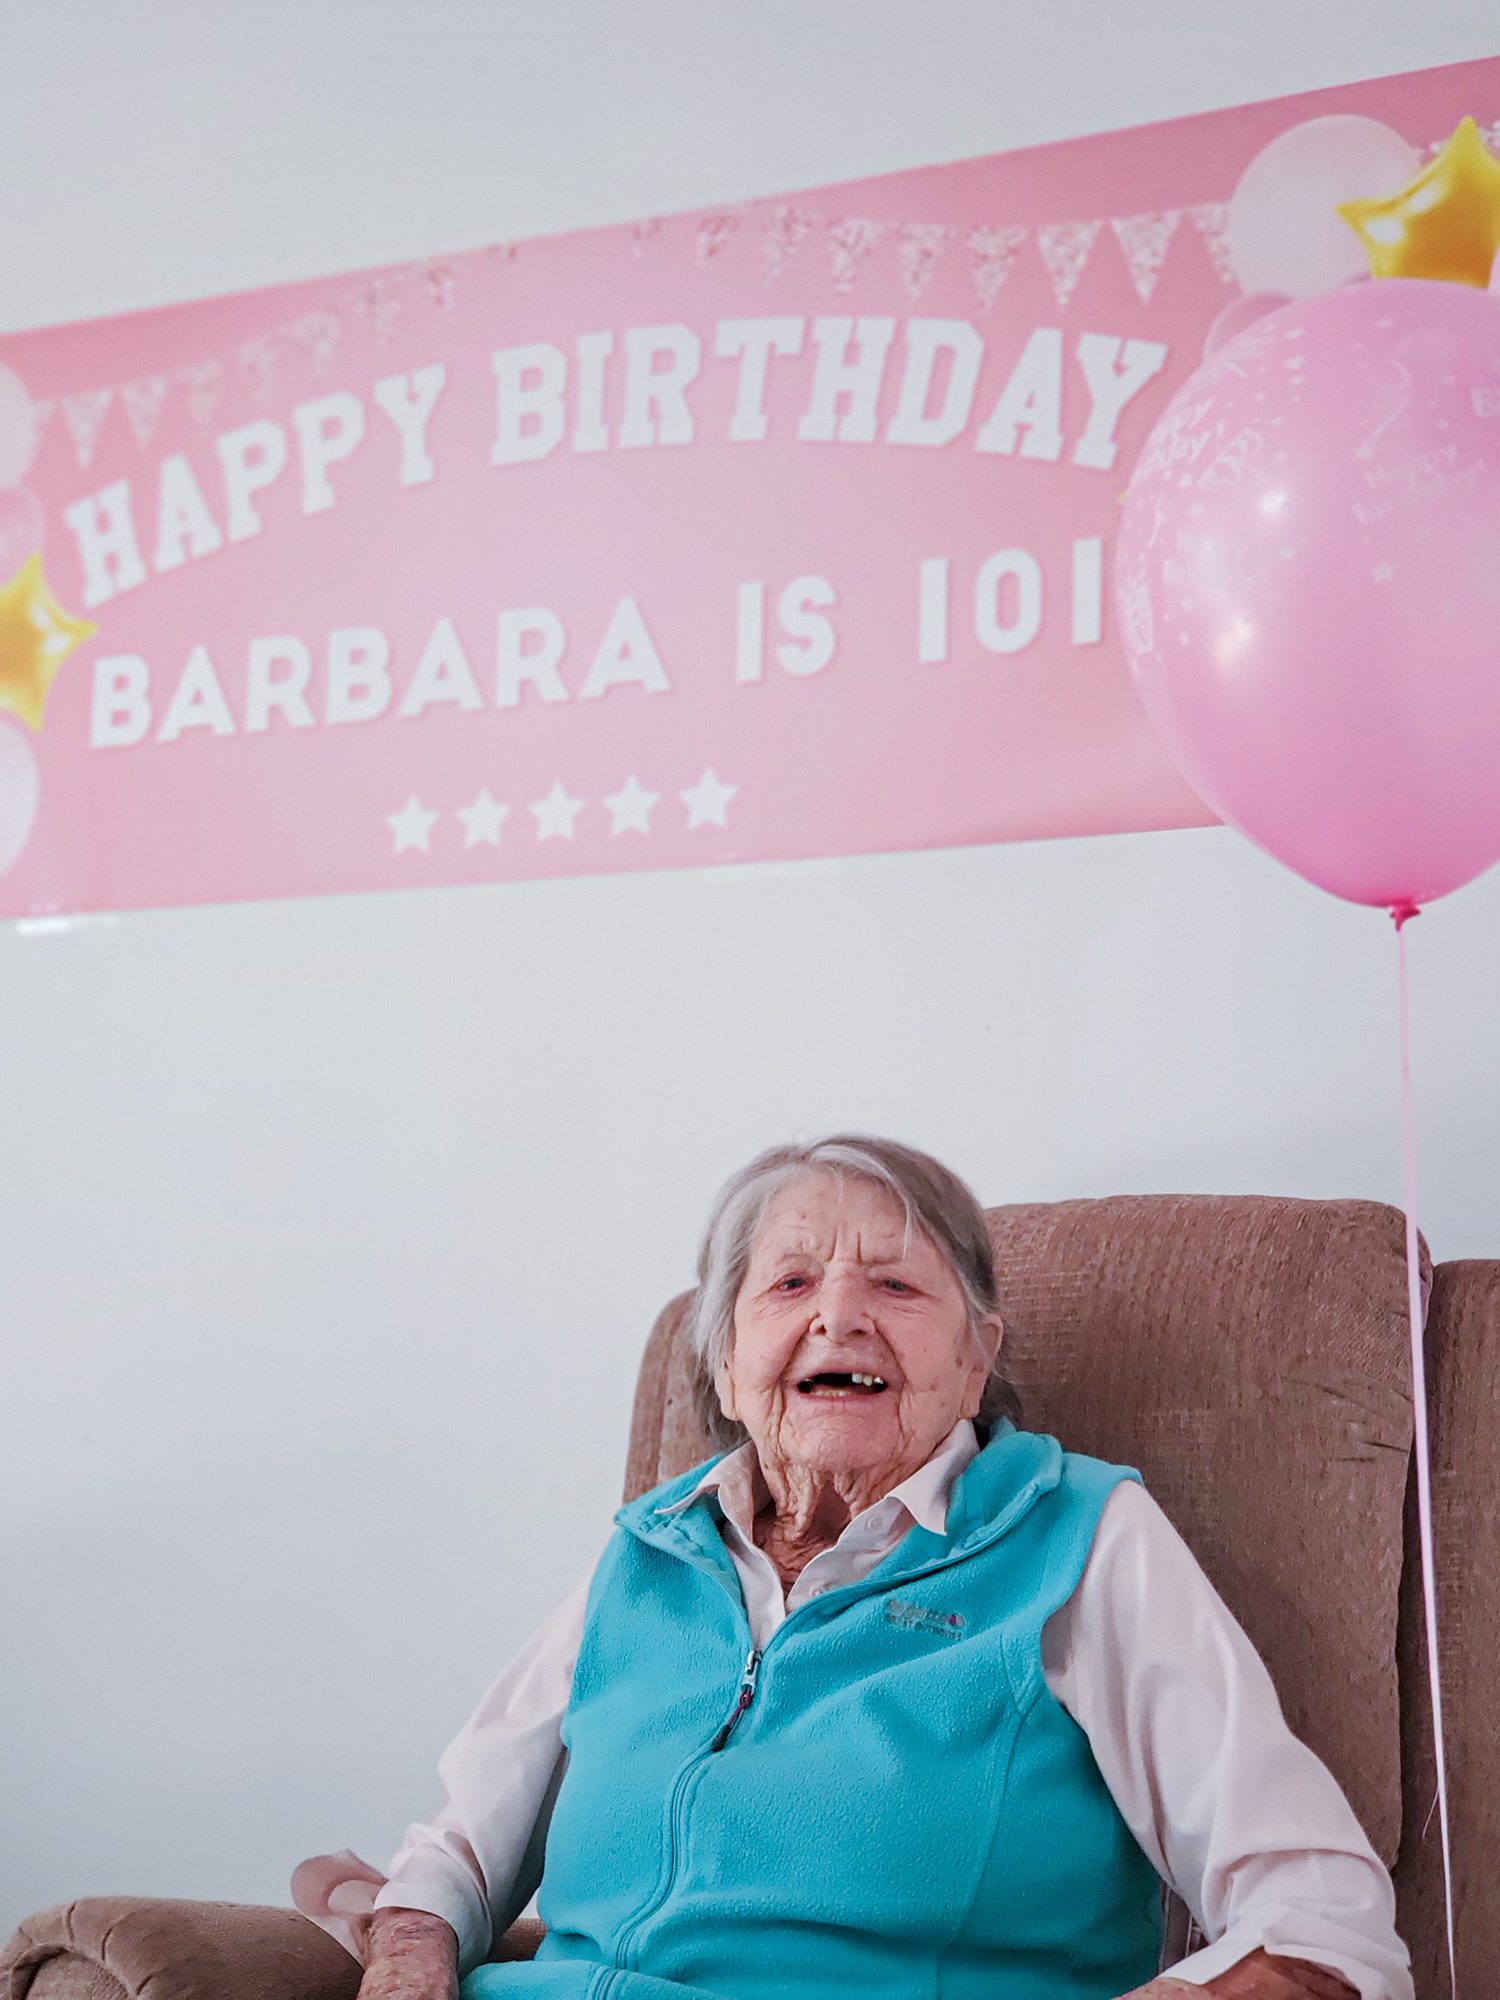 Barbara smiling on her birthday